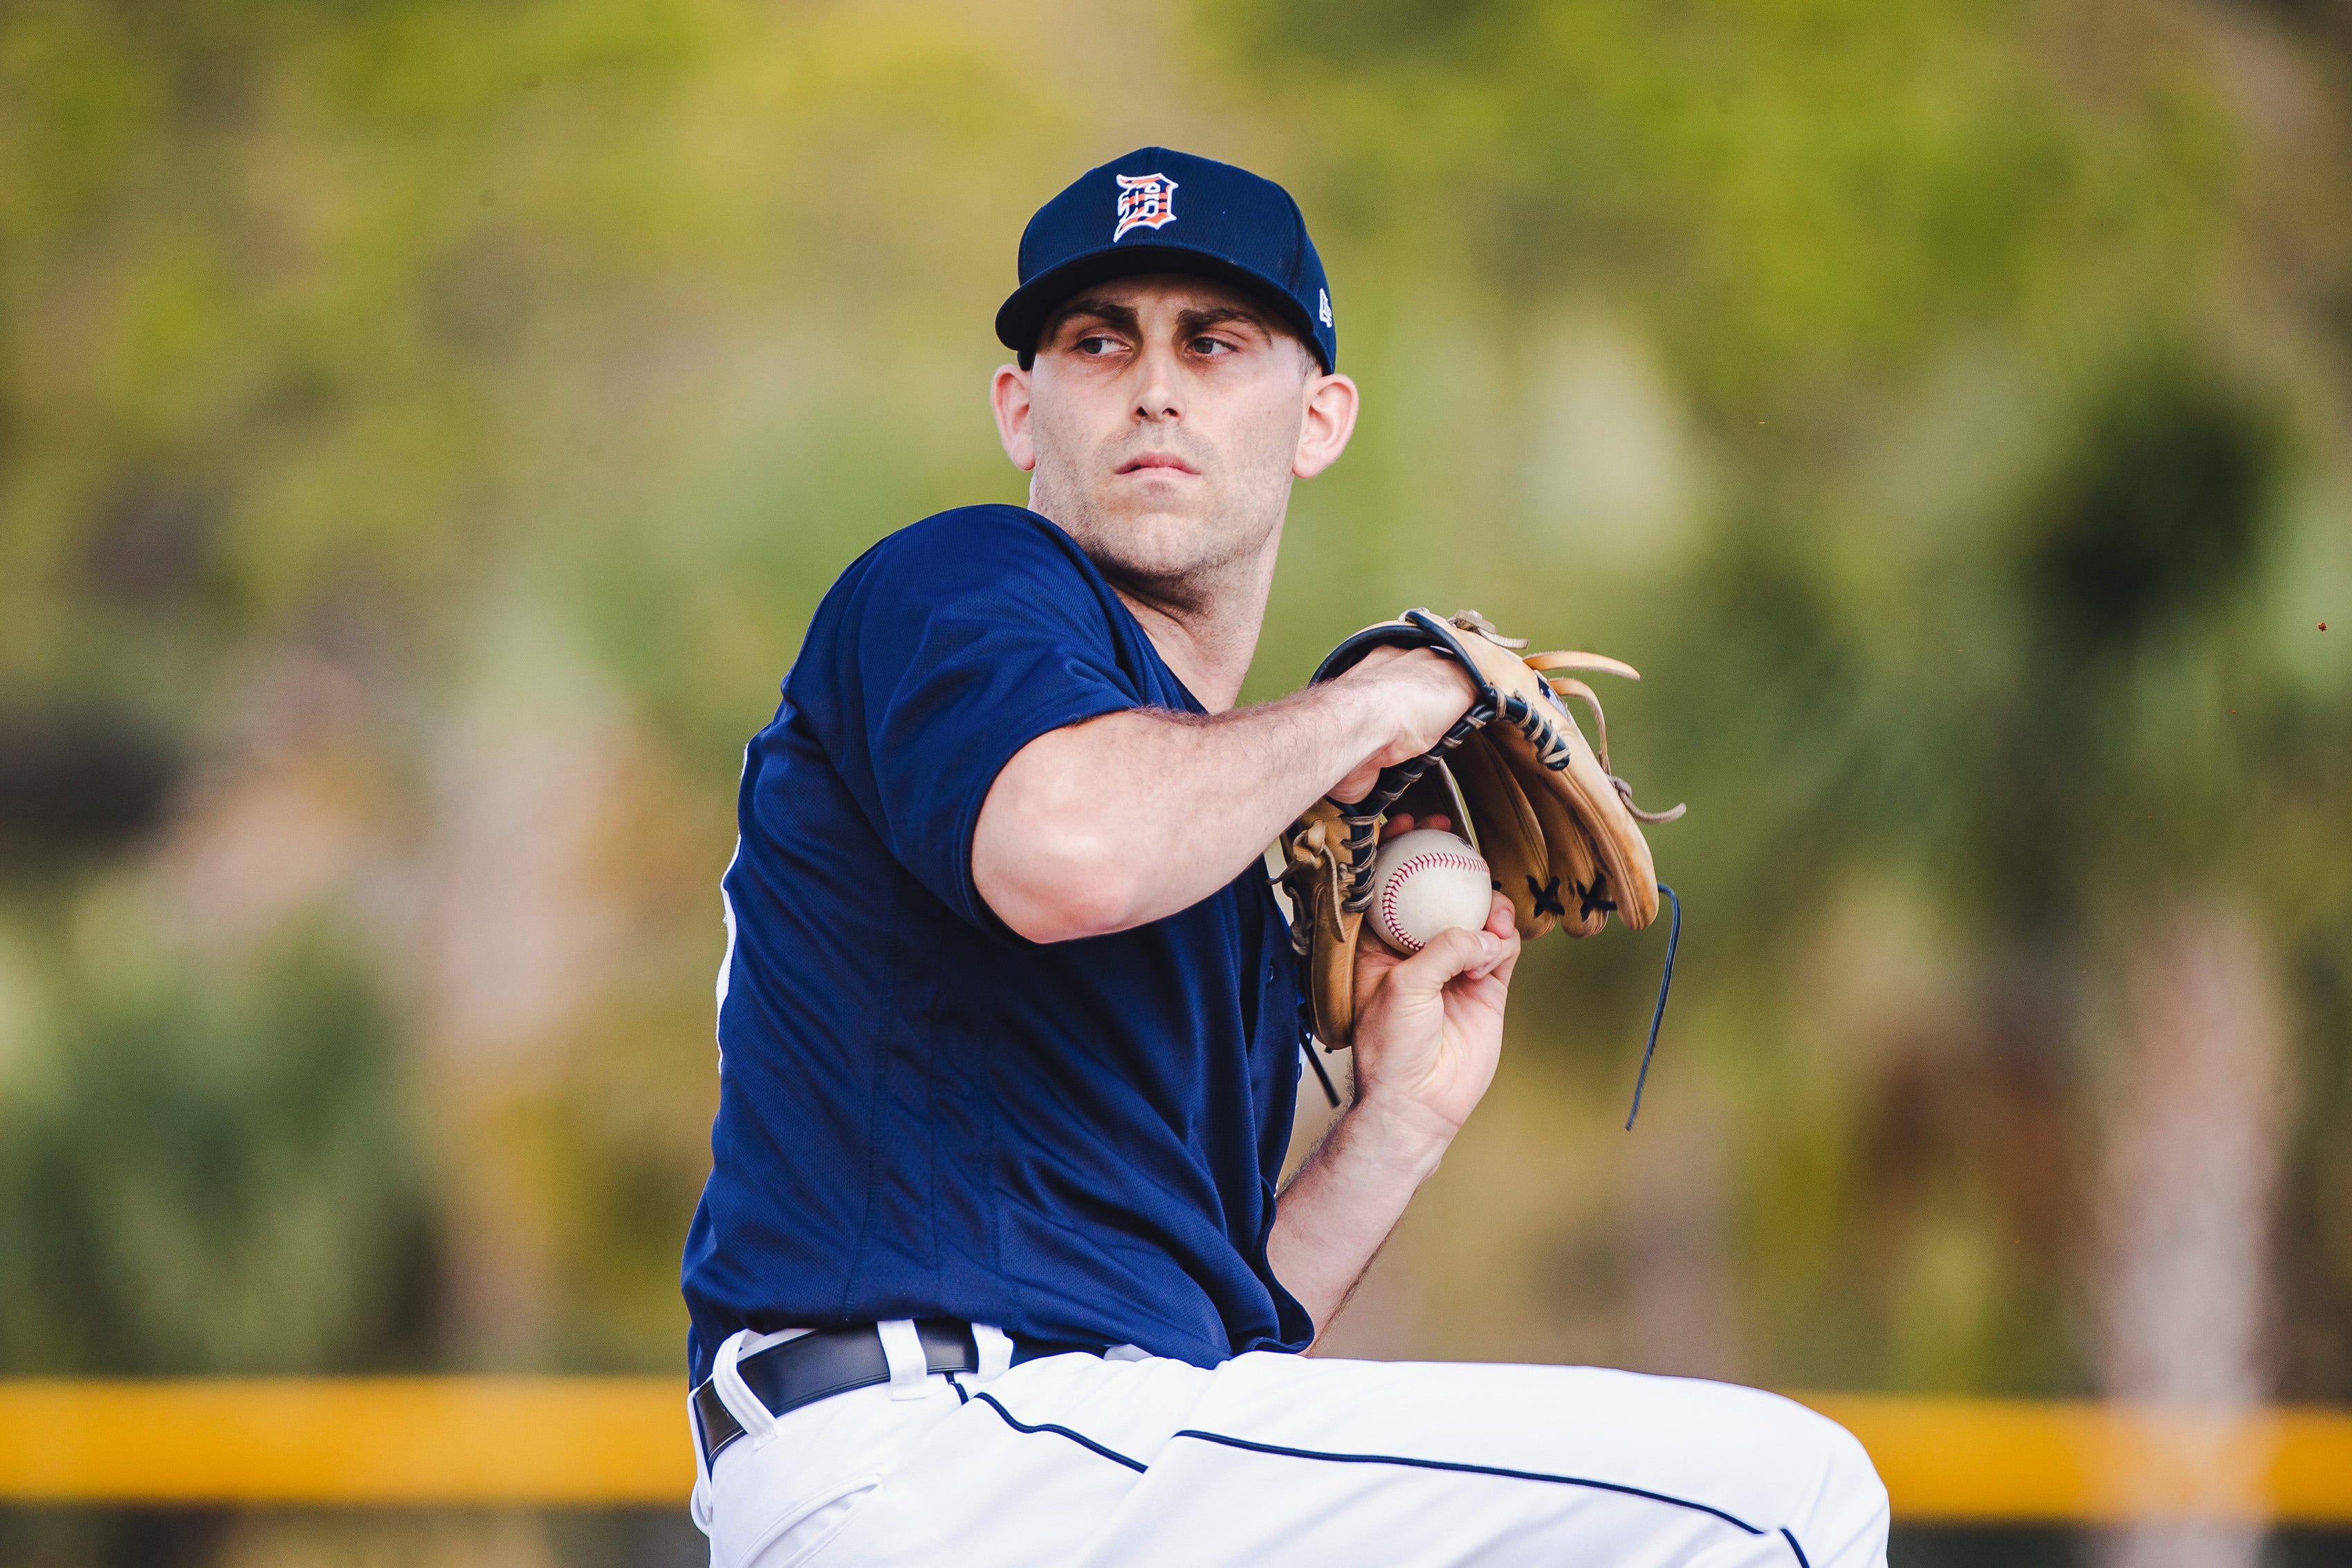 Tigers pitcher Matthew Boyd in Lakeland, Florida on February 24, 2021.